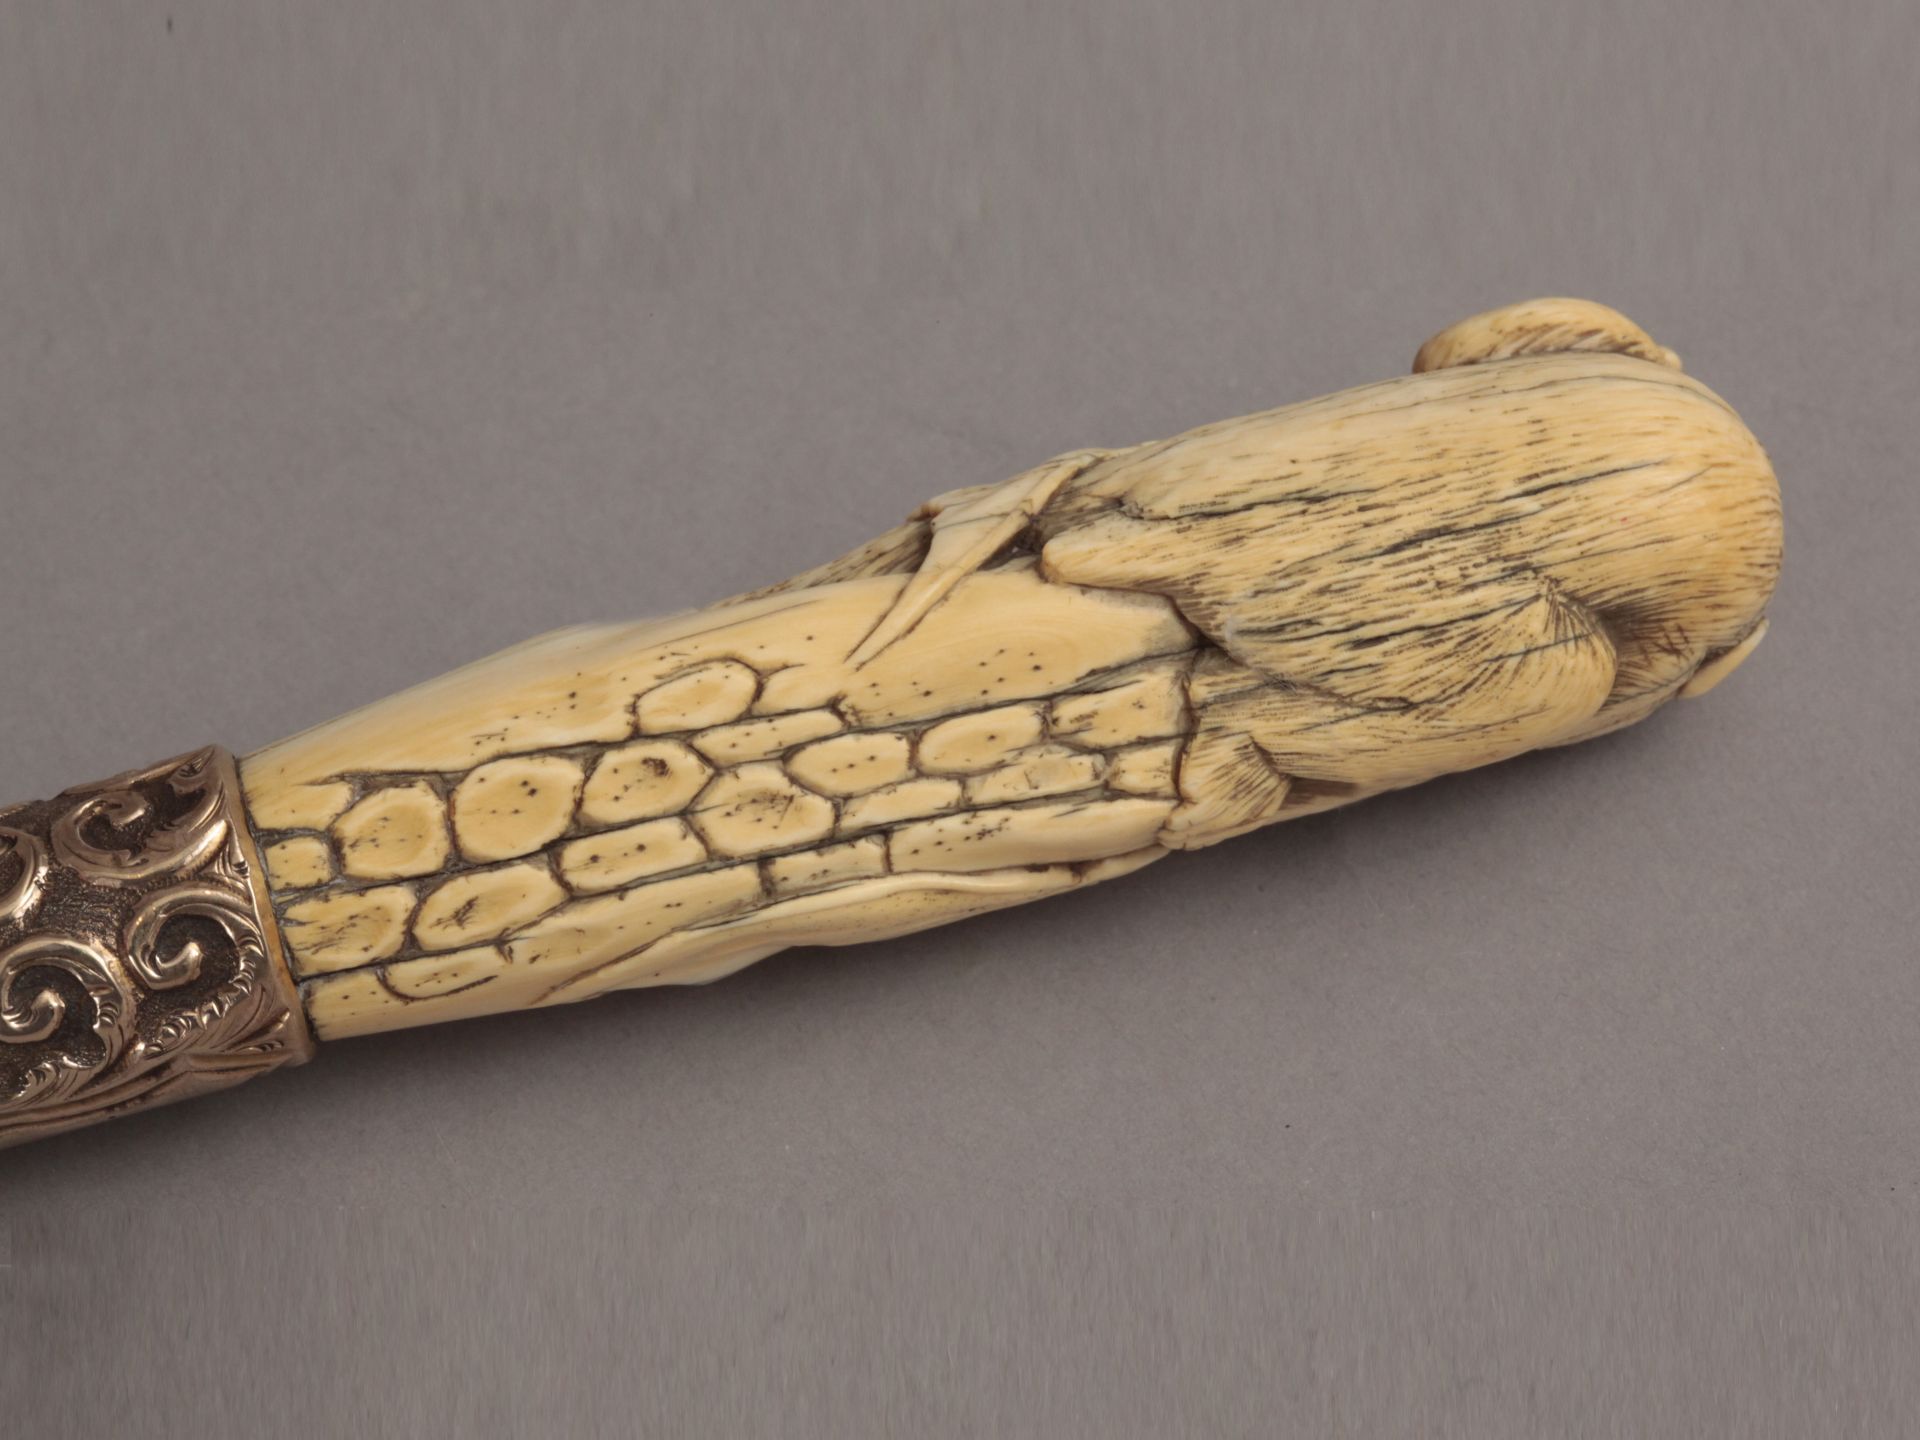 A 19th century English ebony an ivory walking cane